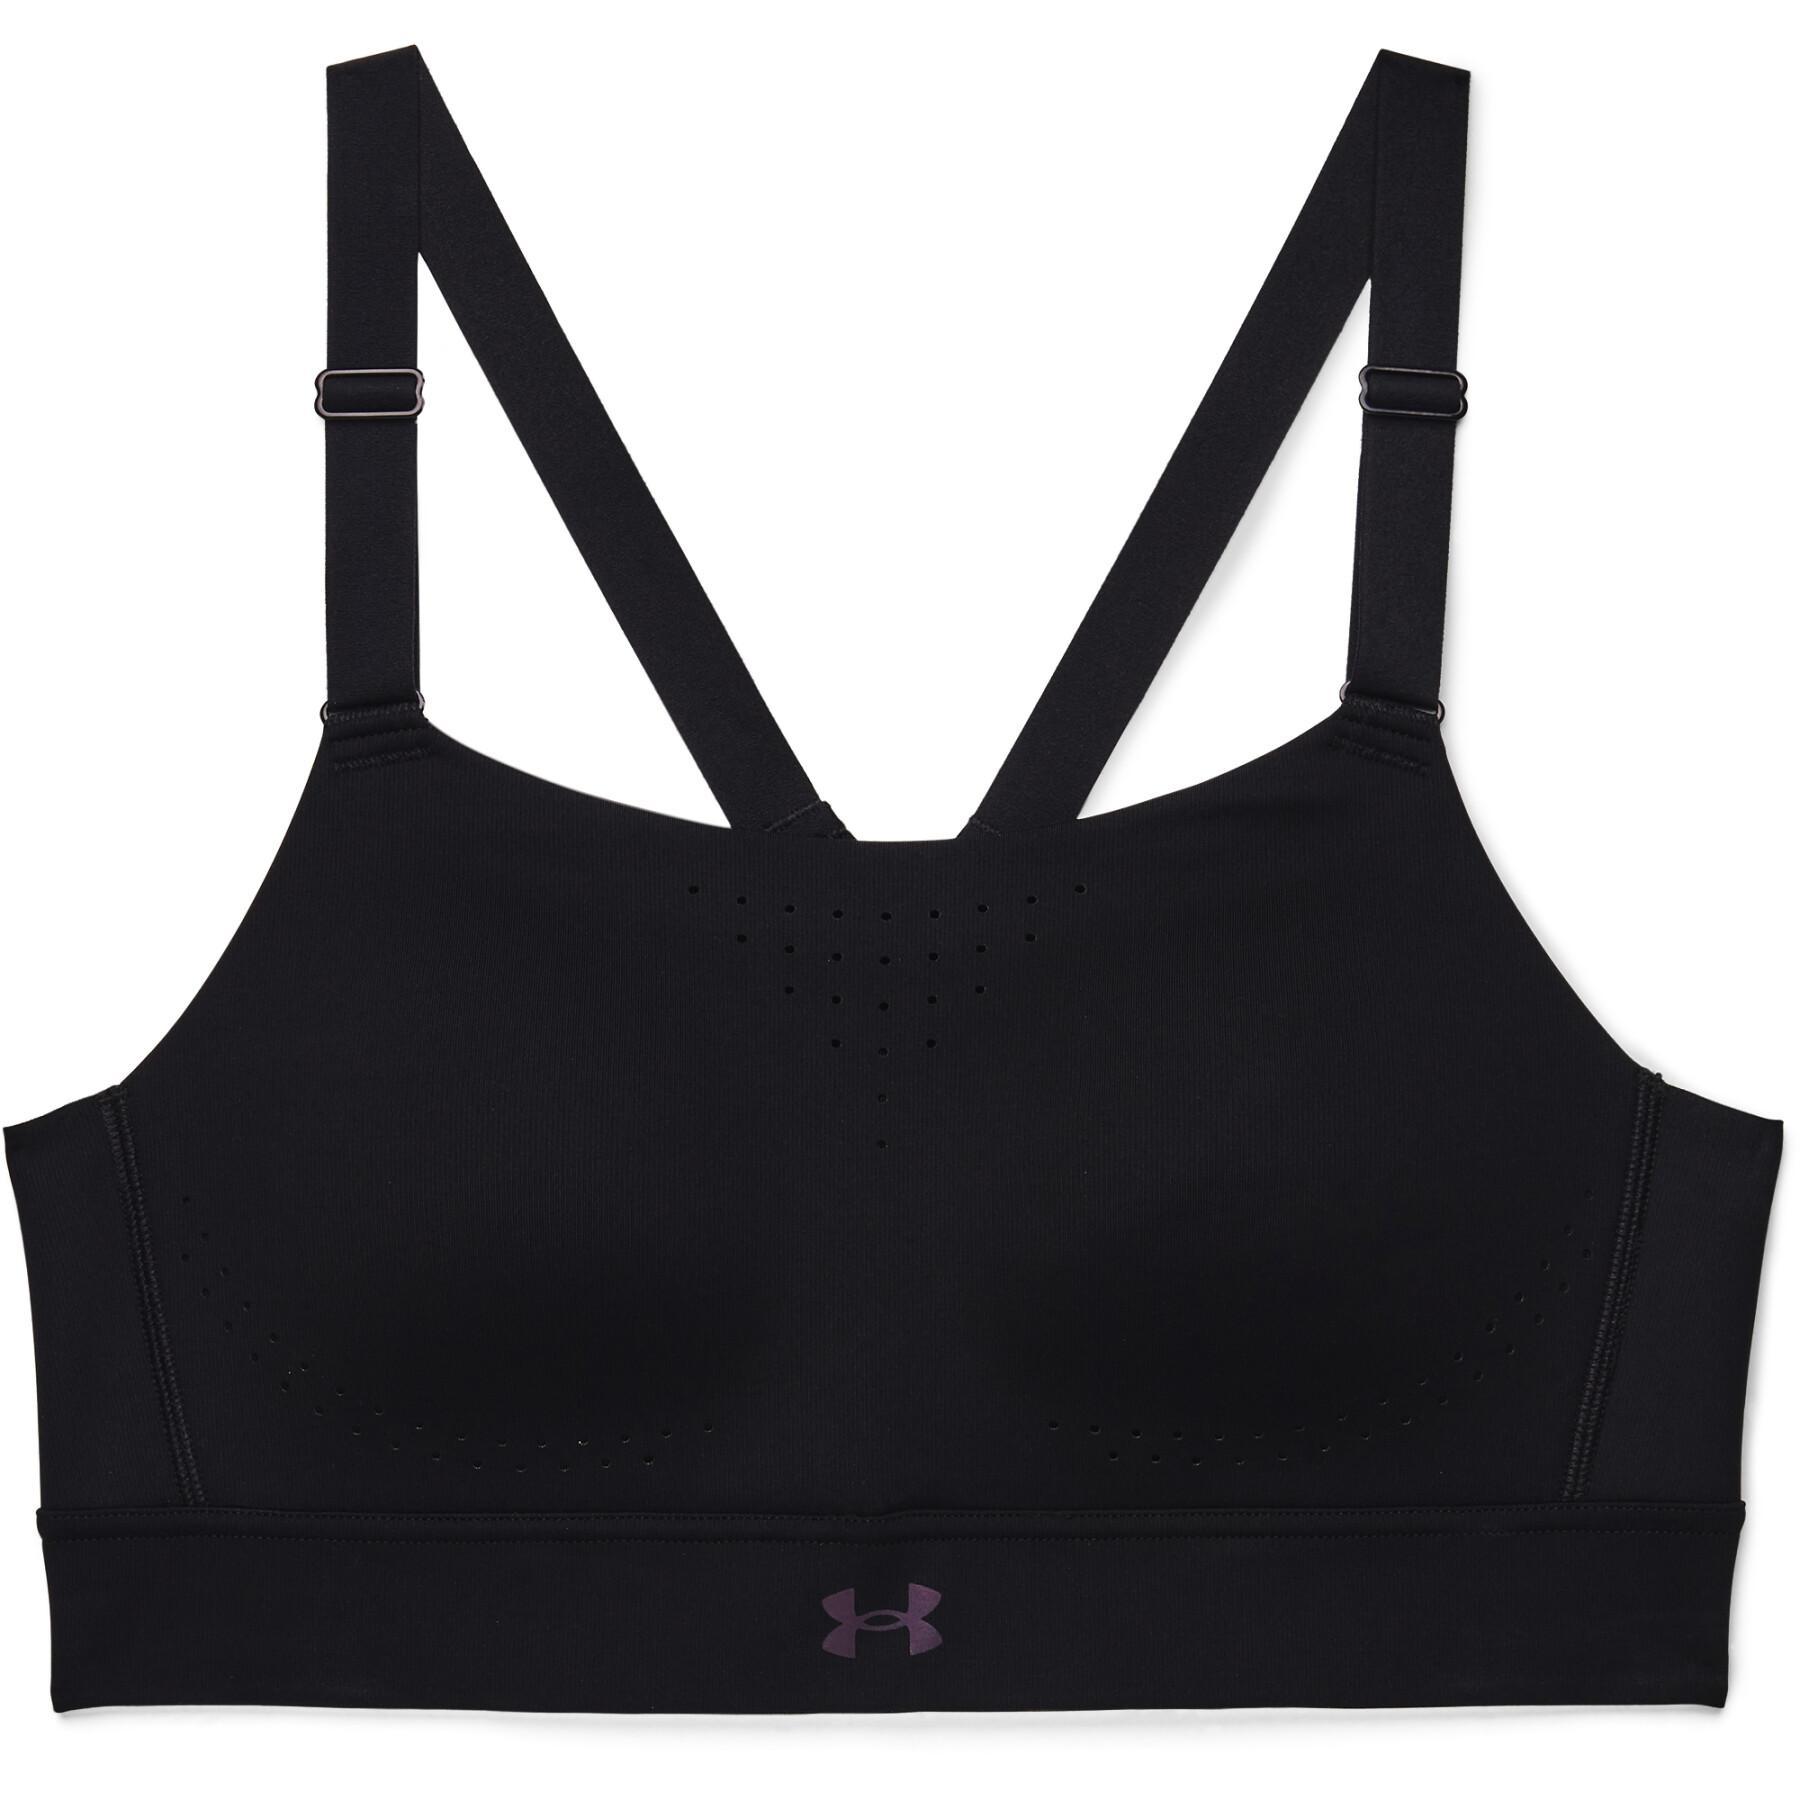 High support sports bra for women Under Armour RUSH™ - Sports bras -  Women's wear - Handball wear